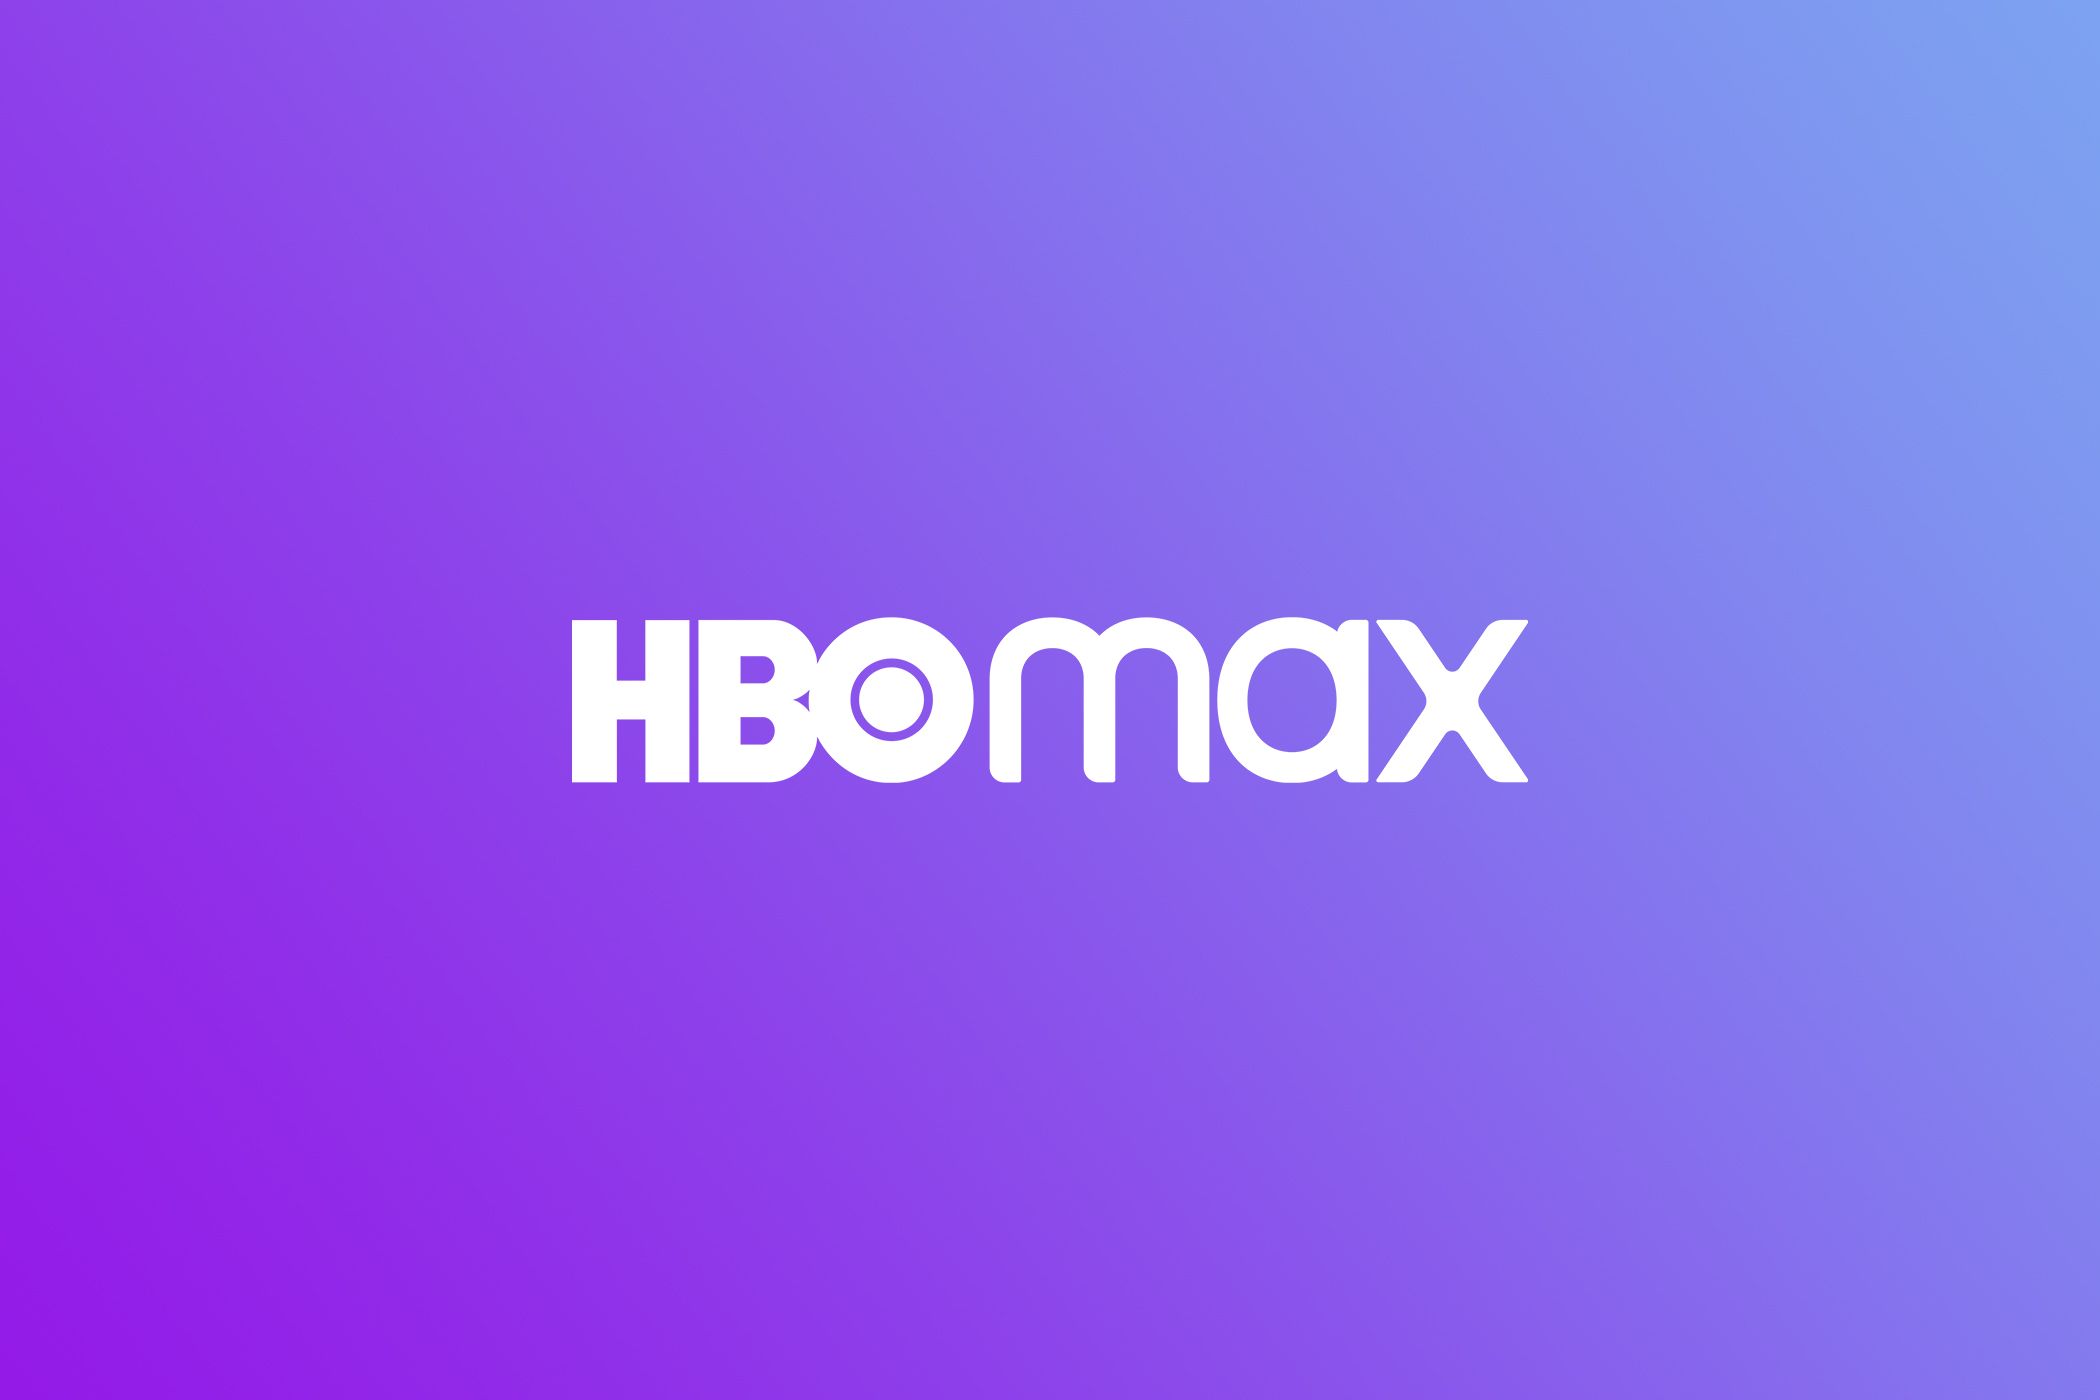 Logotipo de HBO Max sobre fondo degradado.